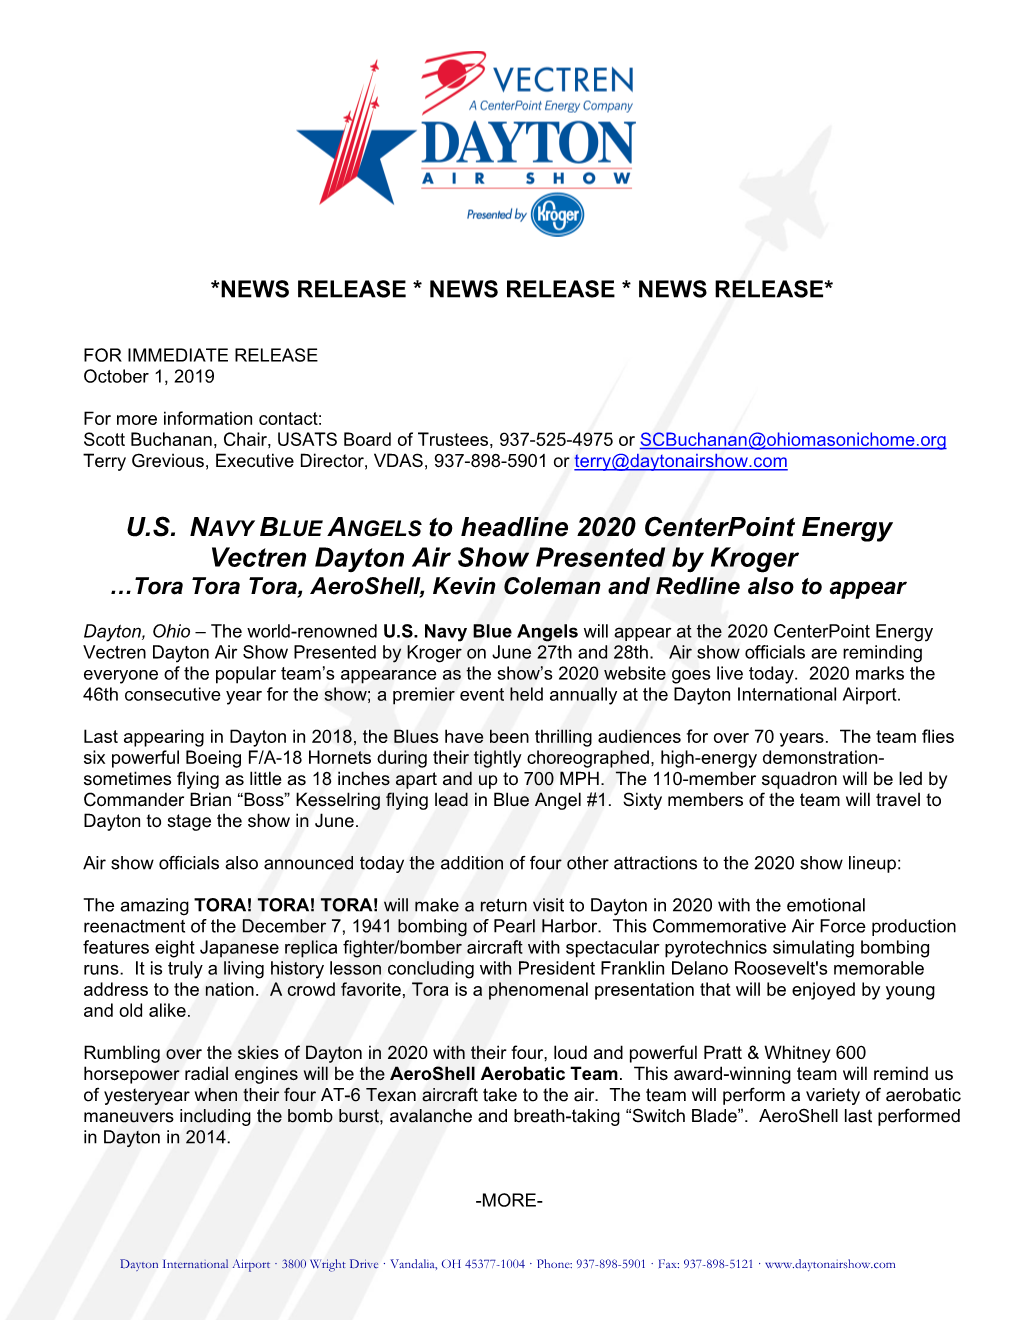 U.S. NAVY BLUE ANGELS to Headline 2020 Centerpoint Energy